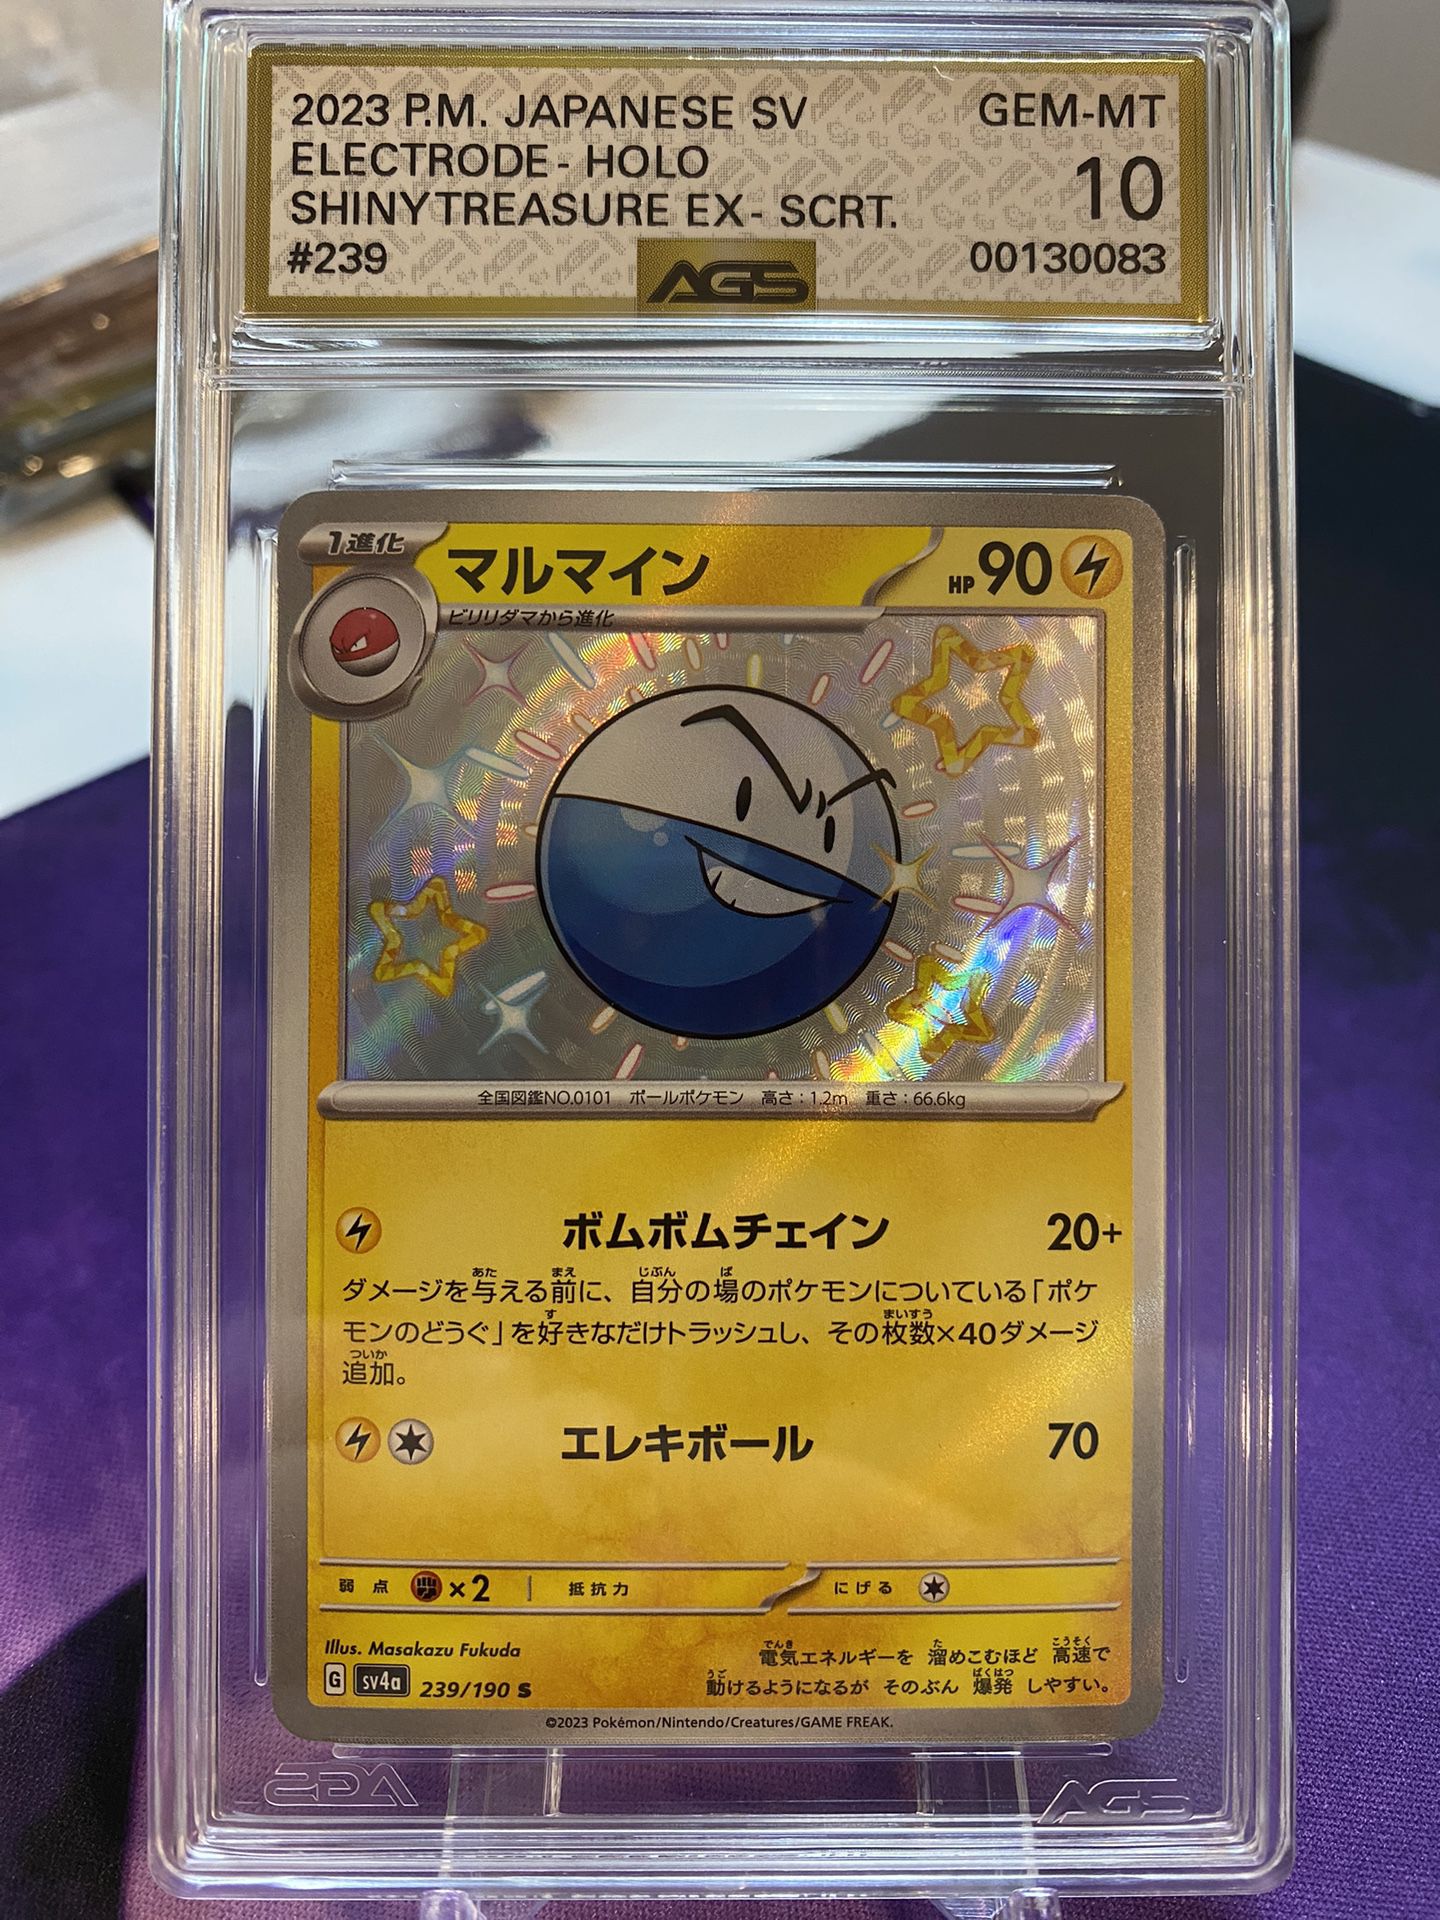 Japanese Pokemon TCG Electrode Shiny Treasures Ex #239 S AGS Graded GEM-MT 10